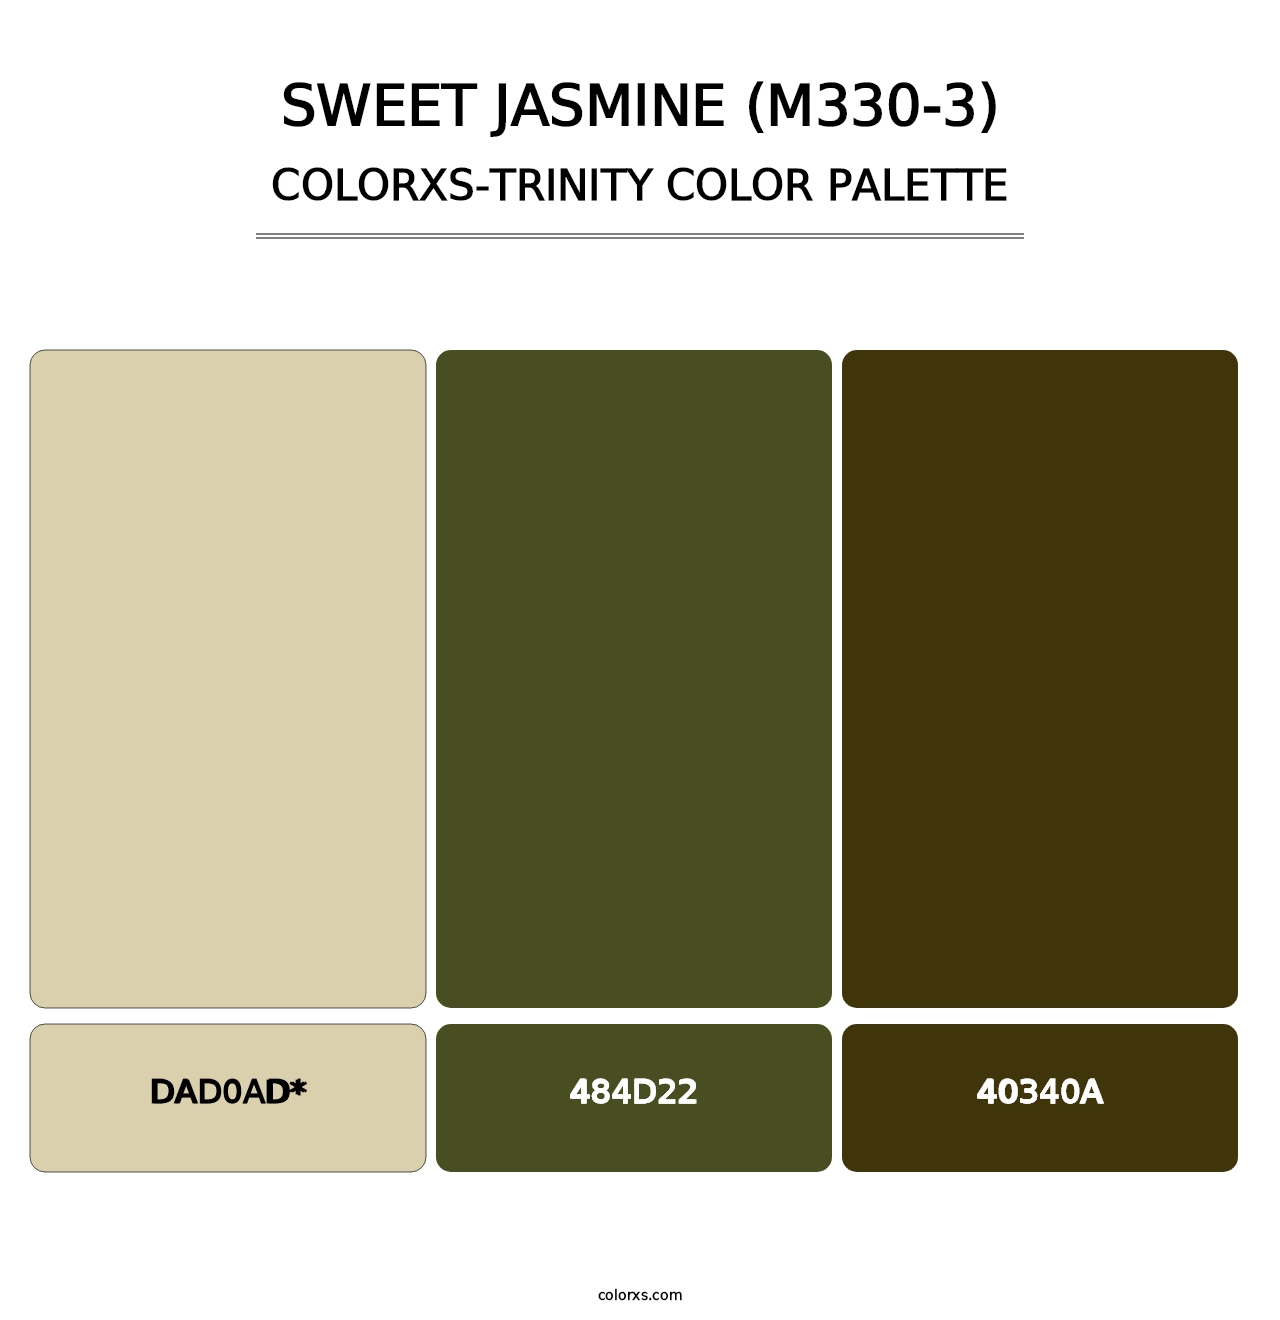 Sweet Jasmine (M330-3) - Colorxs Trinity Palette